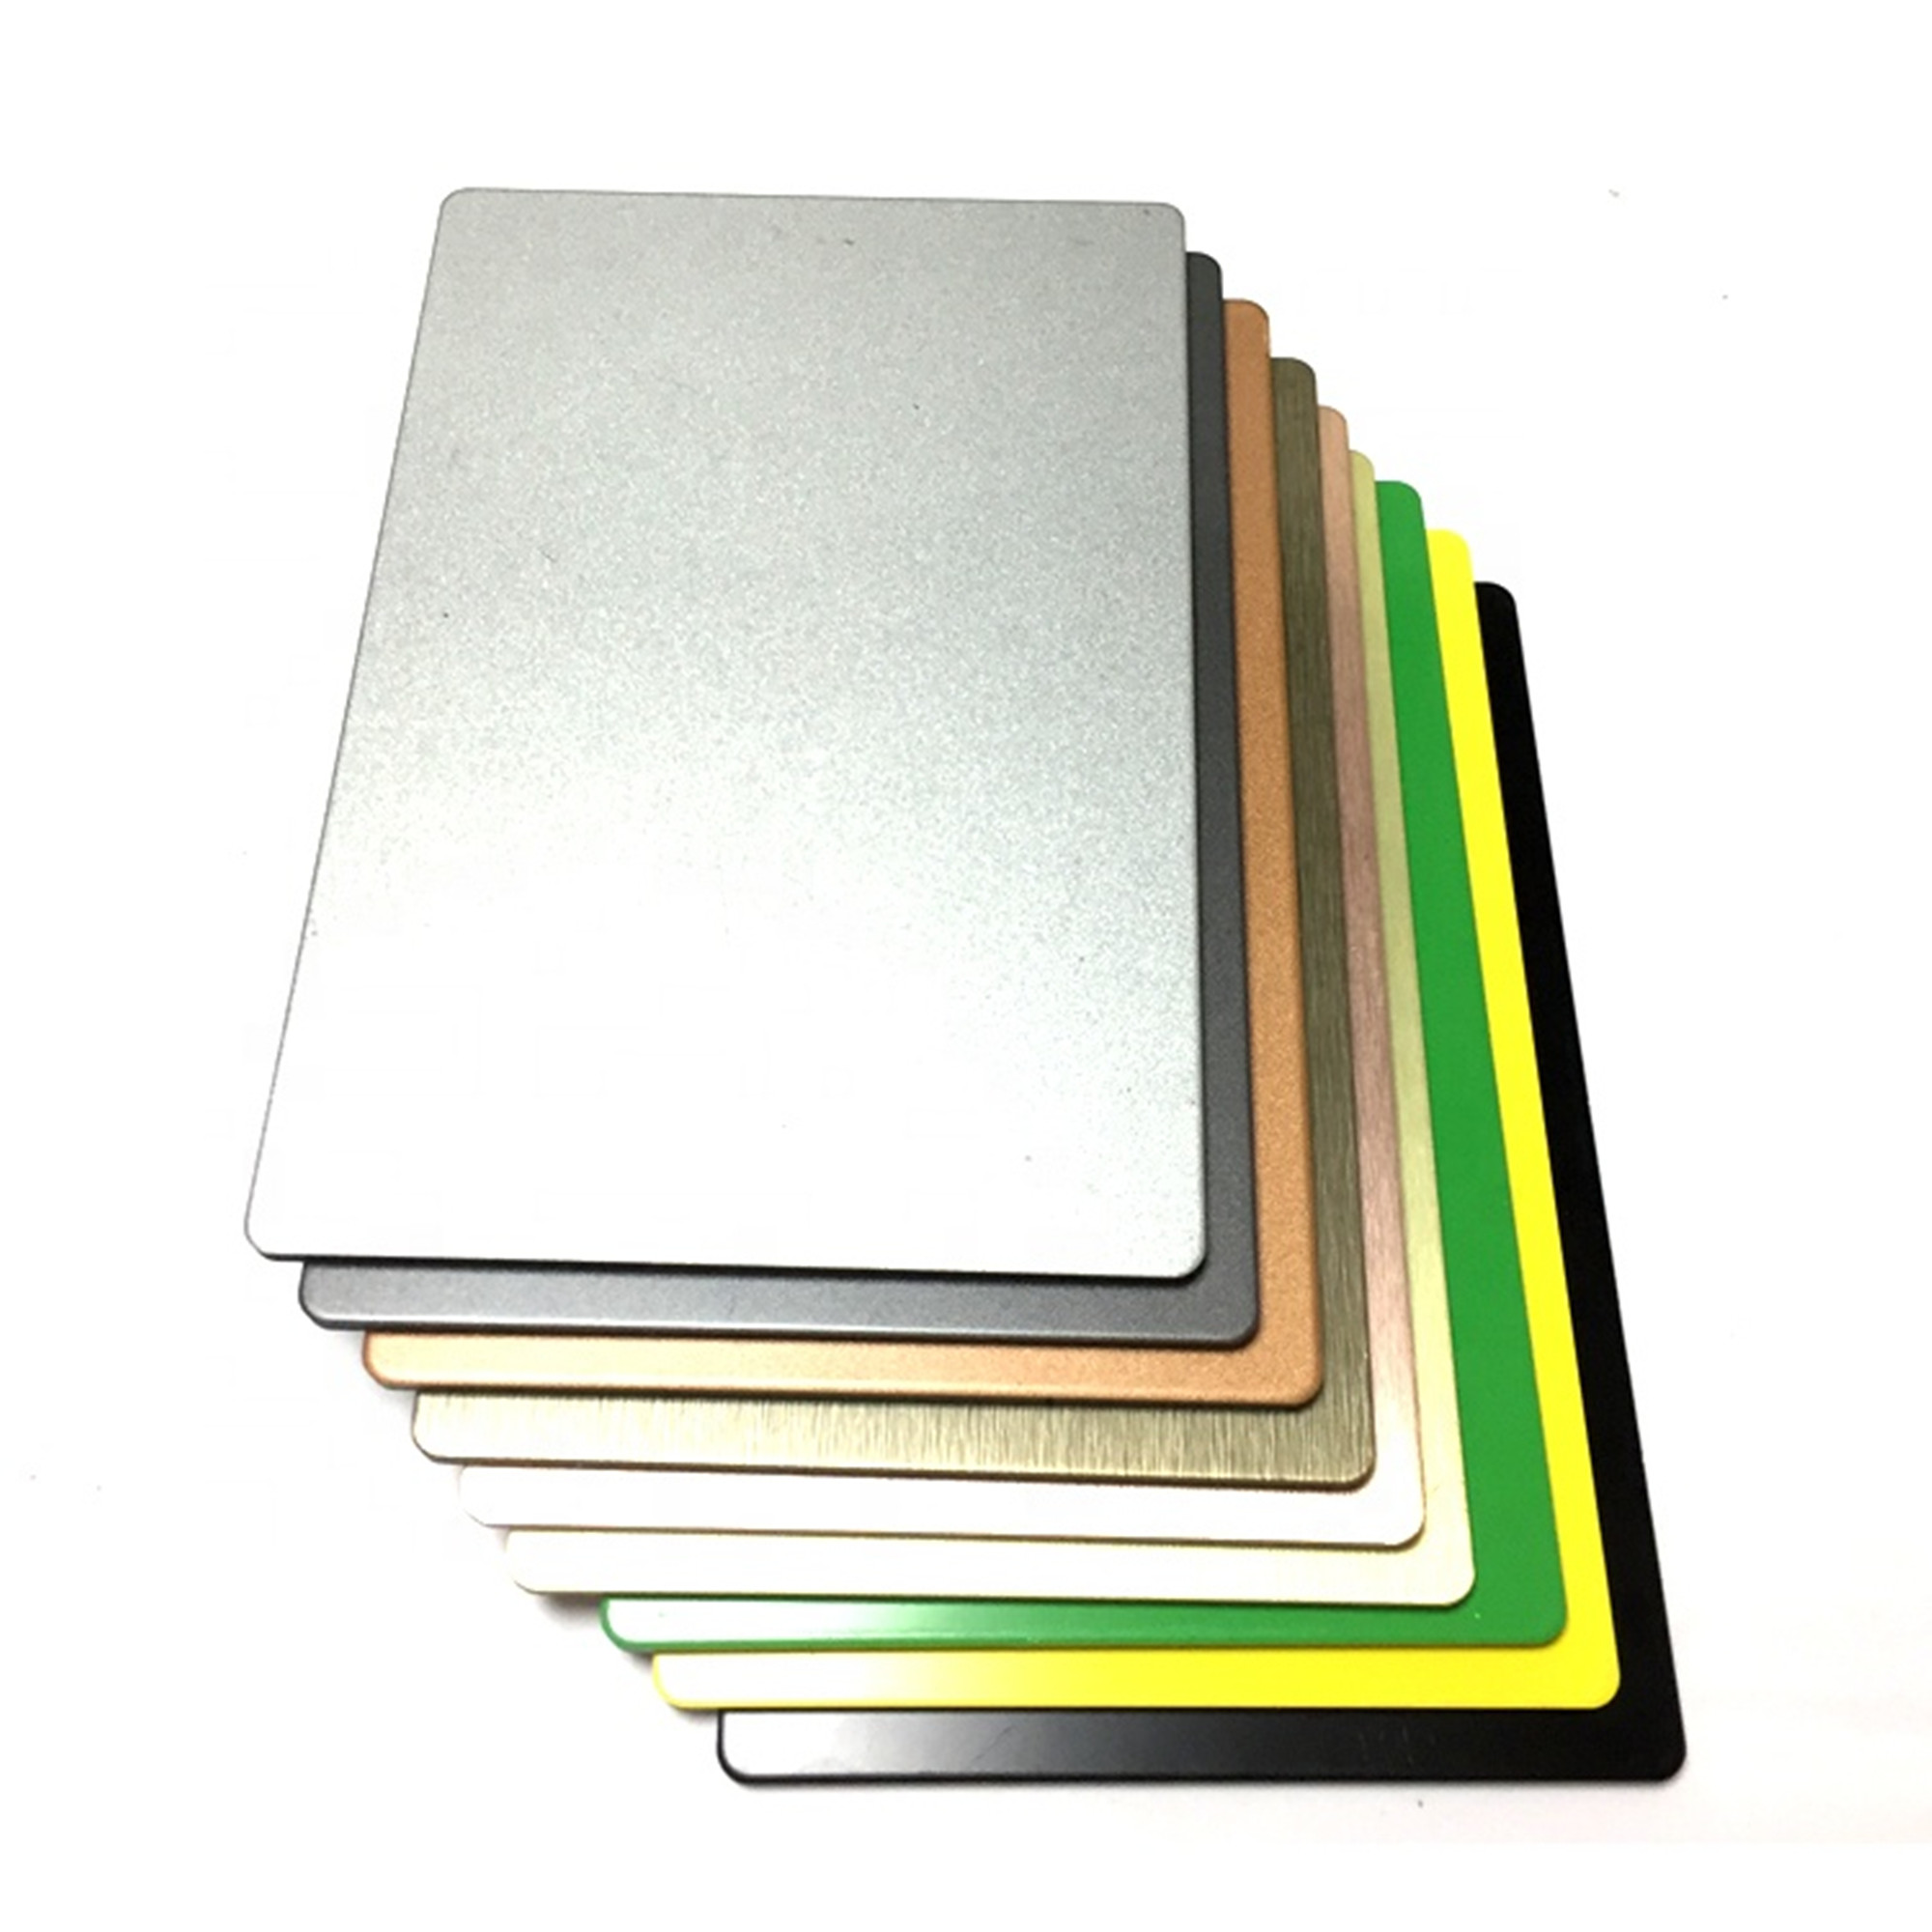 Buy cheap PVDF Unbroken core metal cladding sheet ACP panels from wholesalers